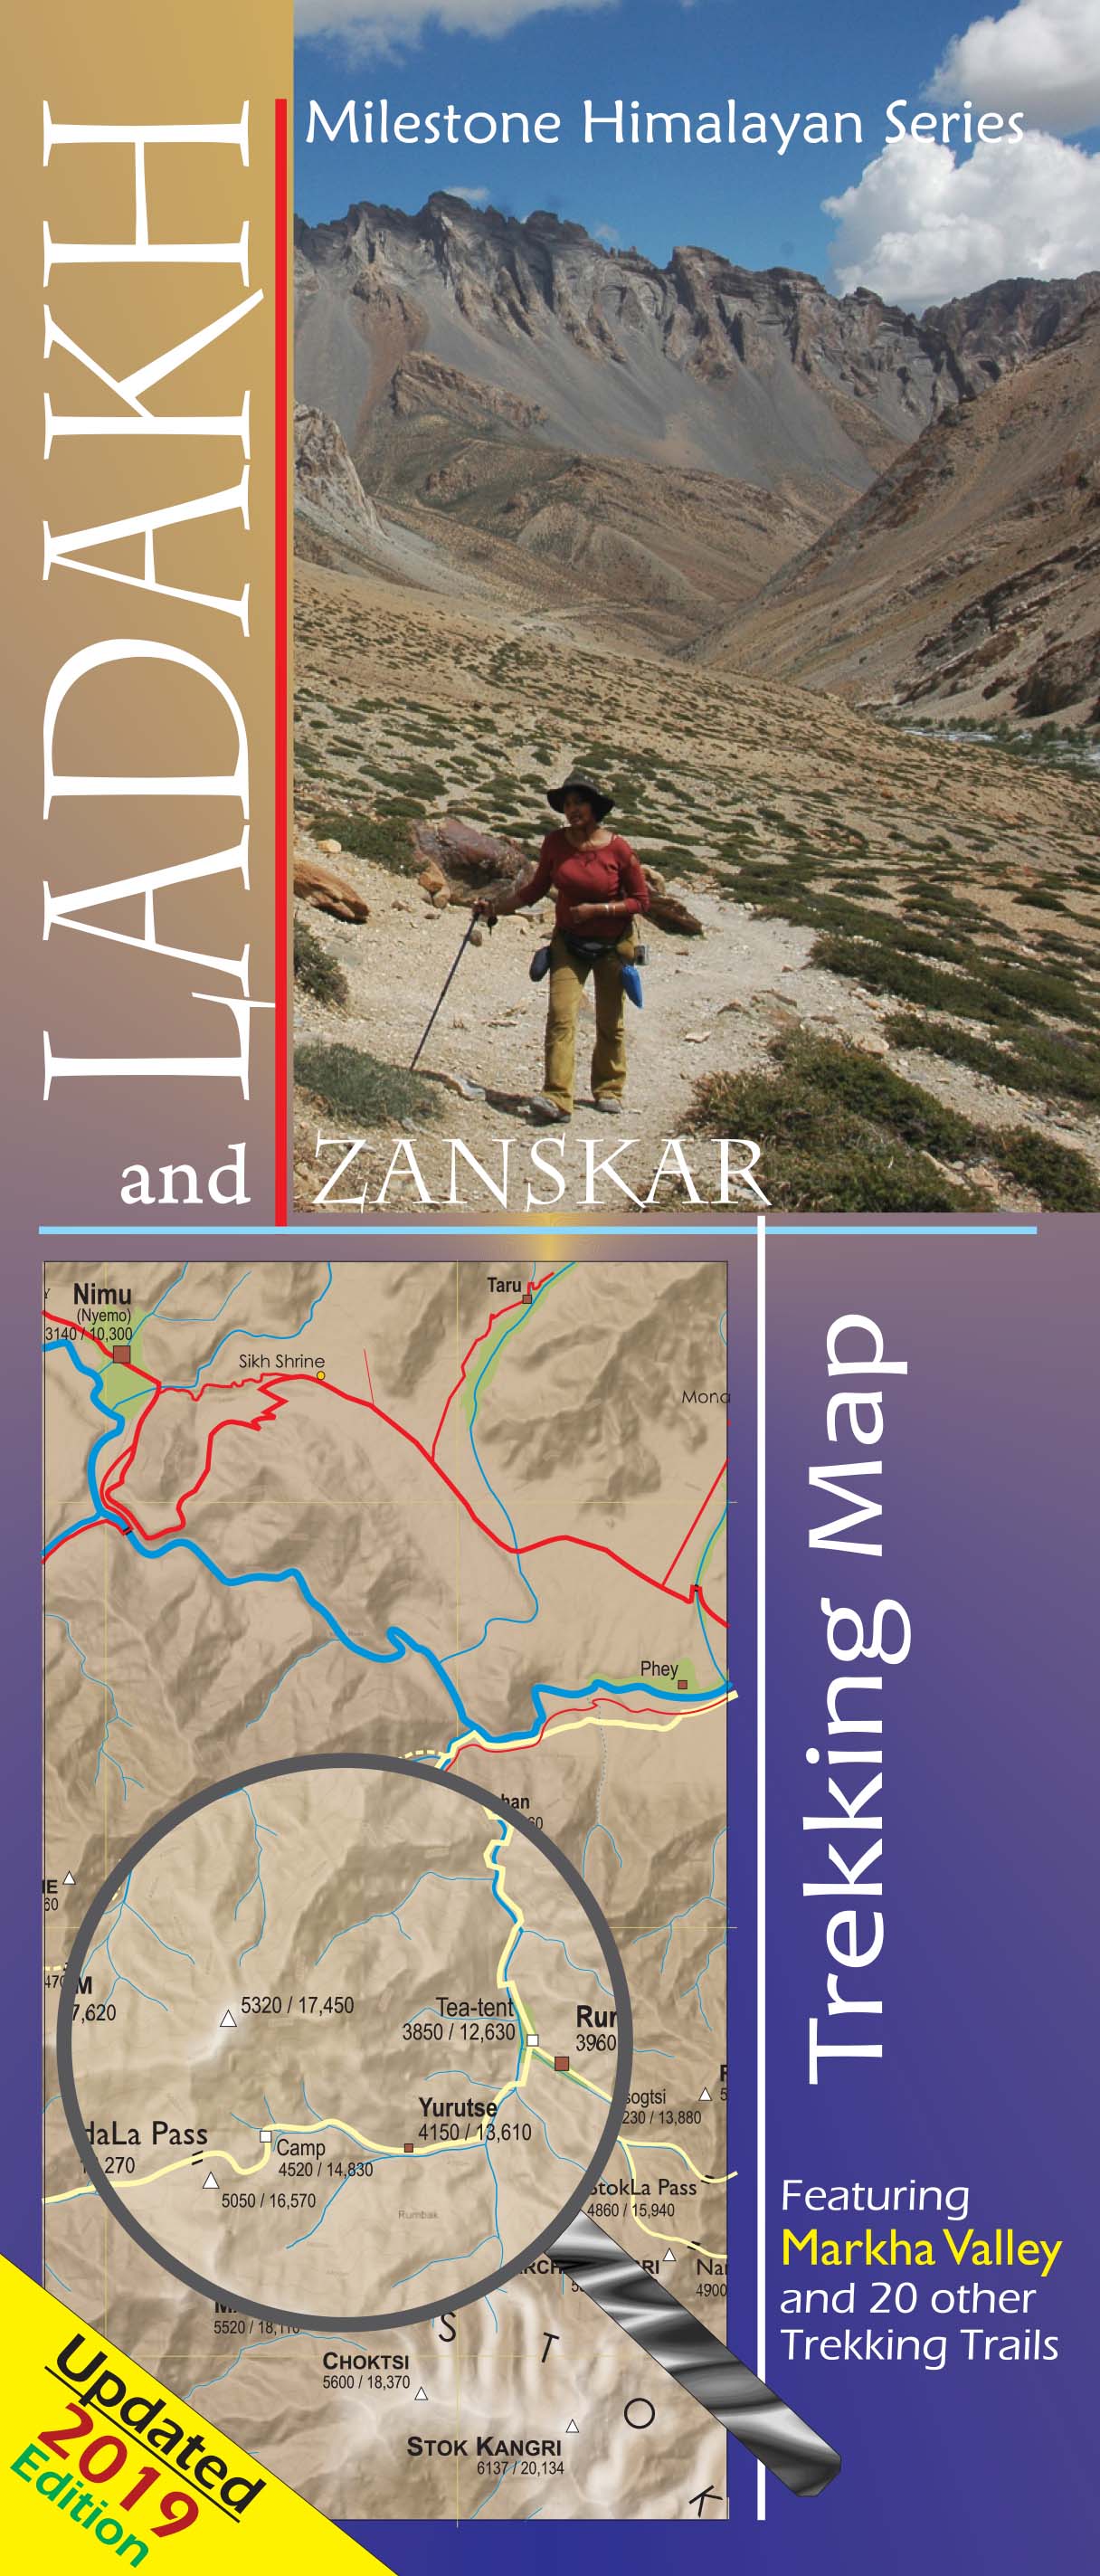 Ladakh Trekking - Suggested Routes for Trekking in Ladakh